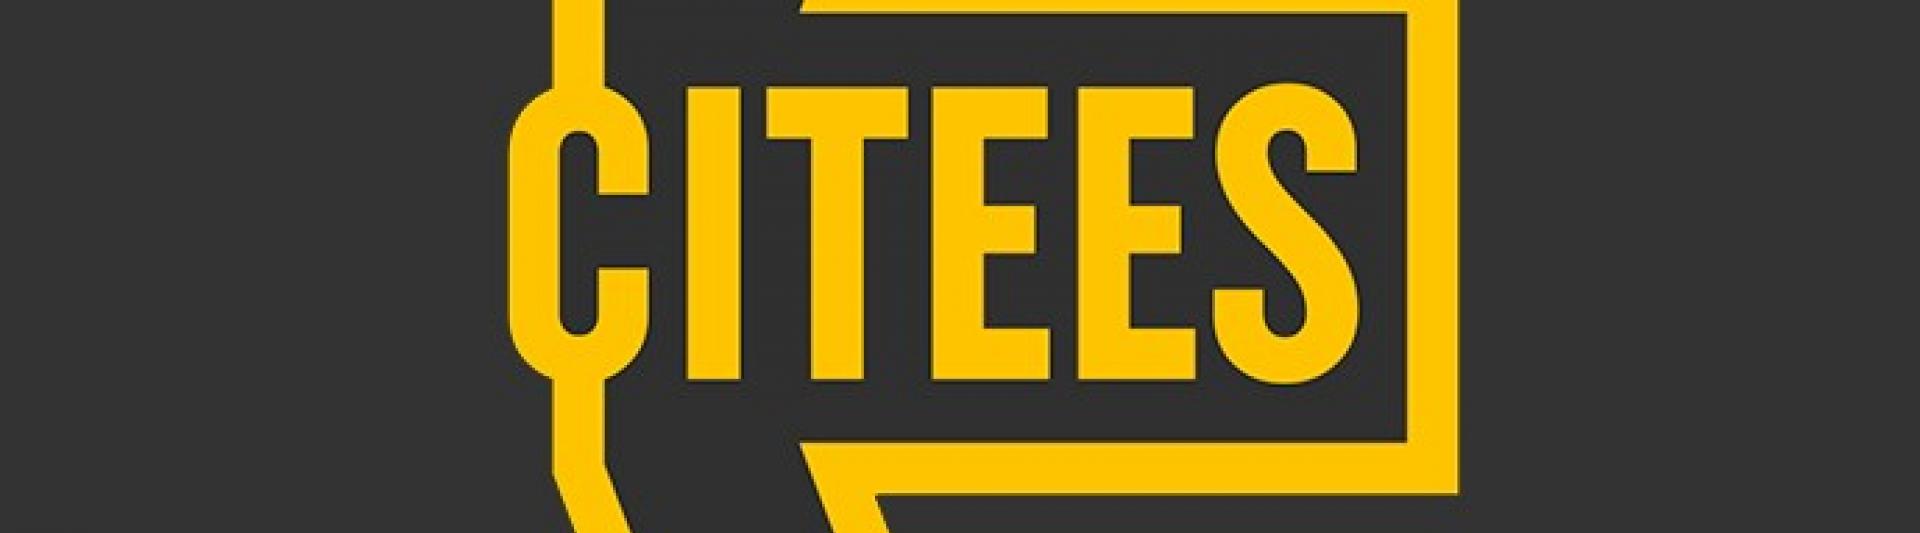 Citees logo 